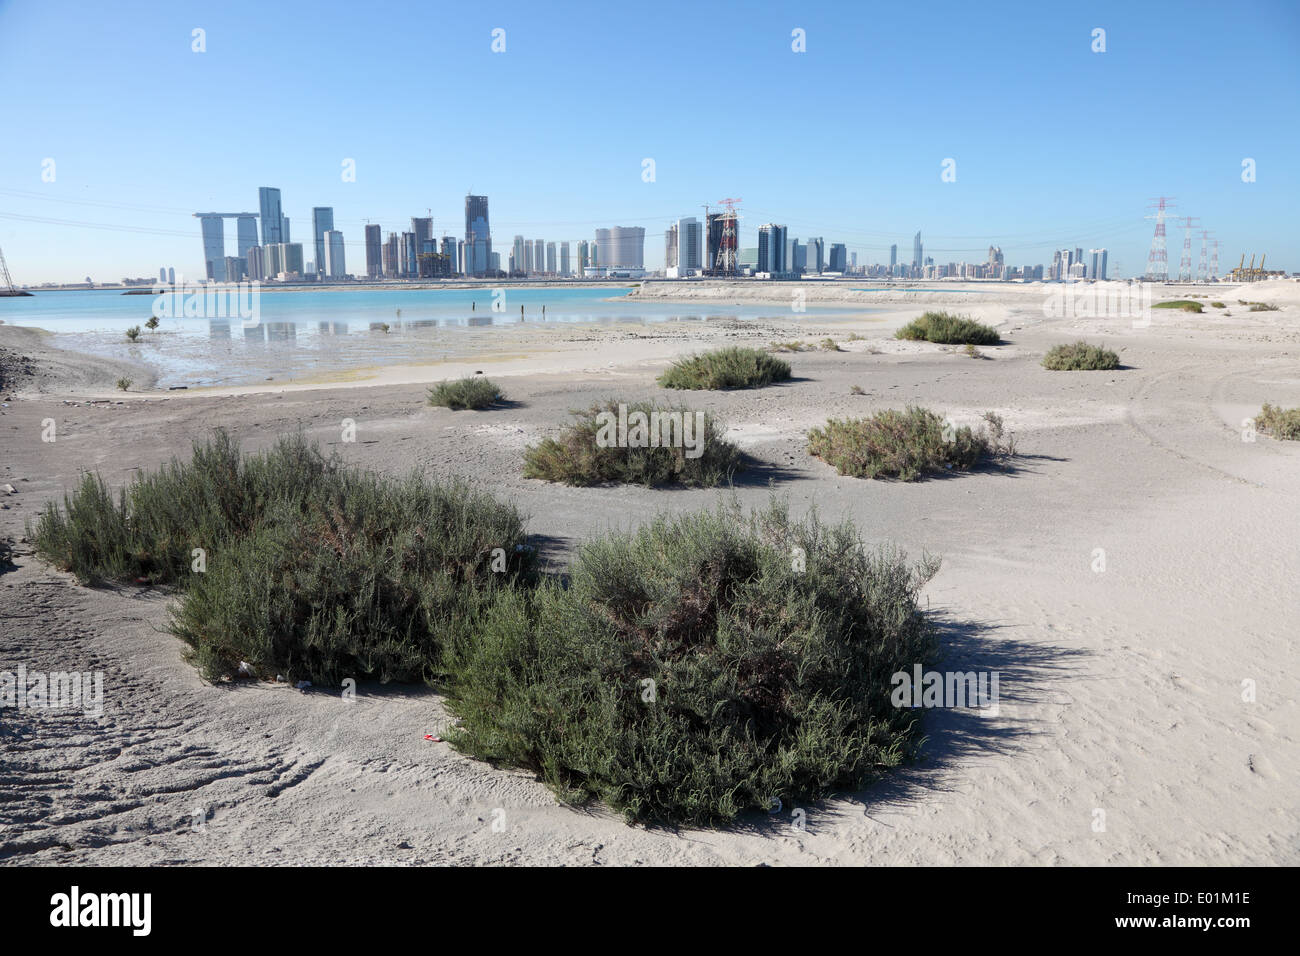 Abu Dhabi skyline come visto da Saadiyat Island Beach, Emirati Arabi Uniti Foto Stock